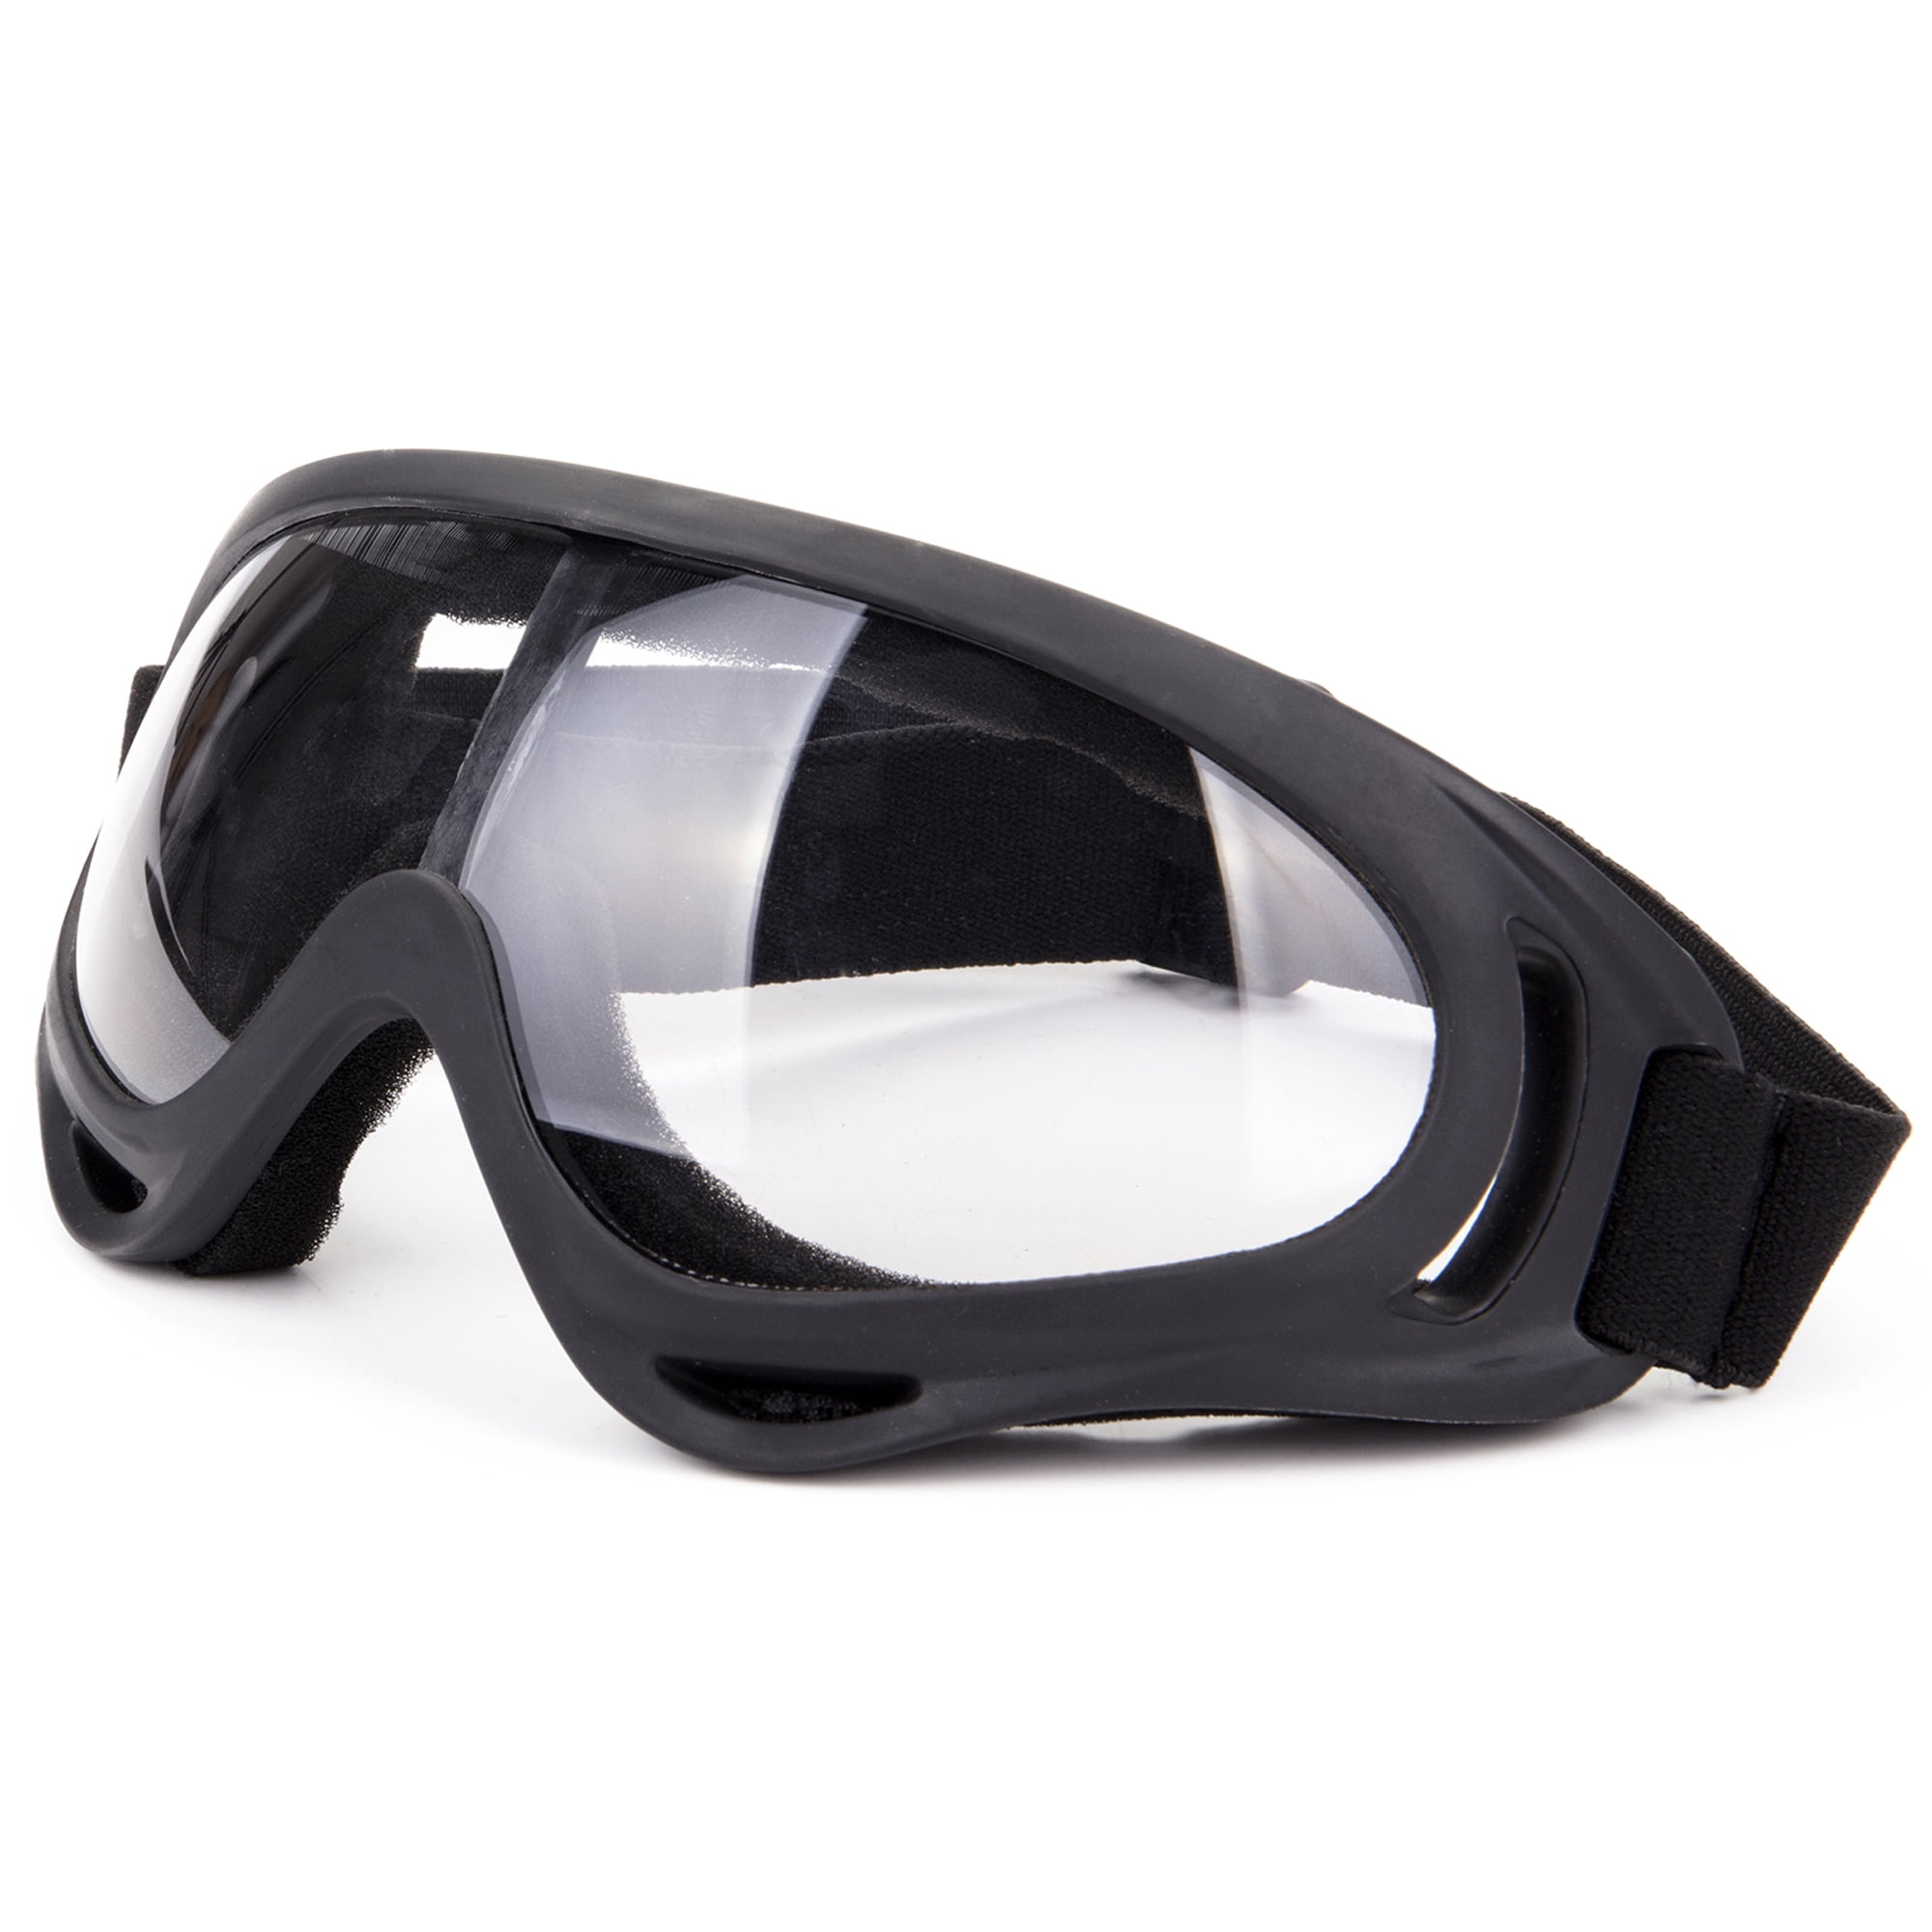 New Outdoor Anti-ultraviolet and Windproof Ski Men's Anti-fog Sunglasses Goggles 